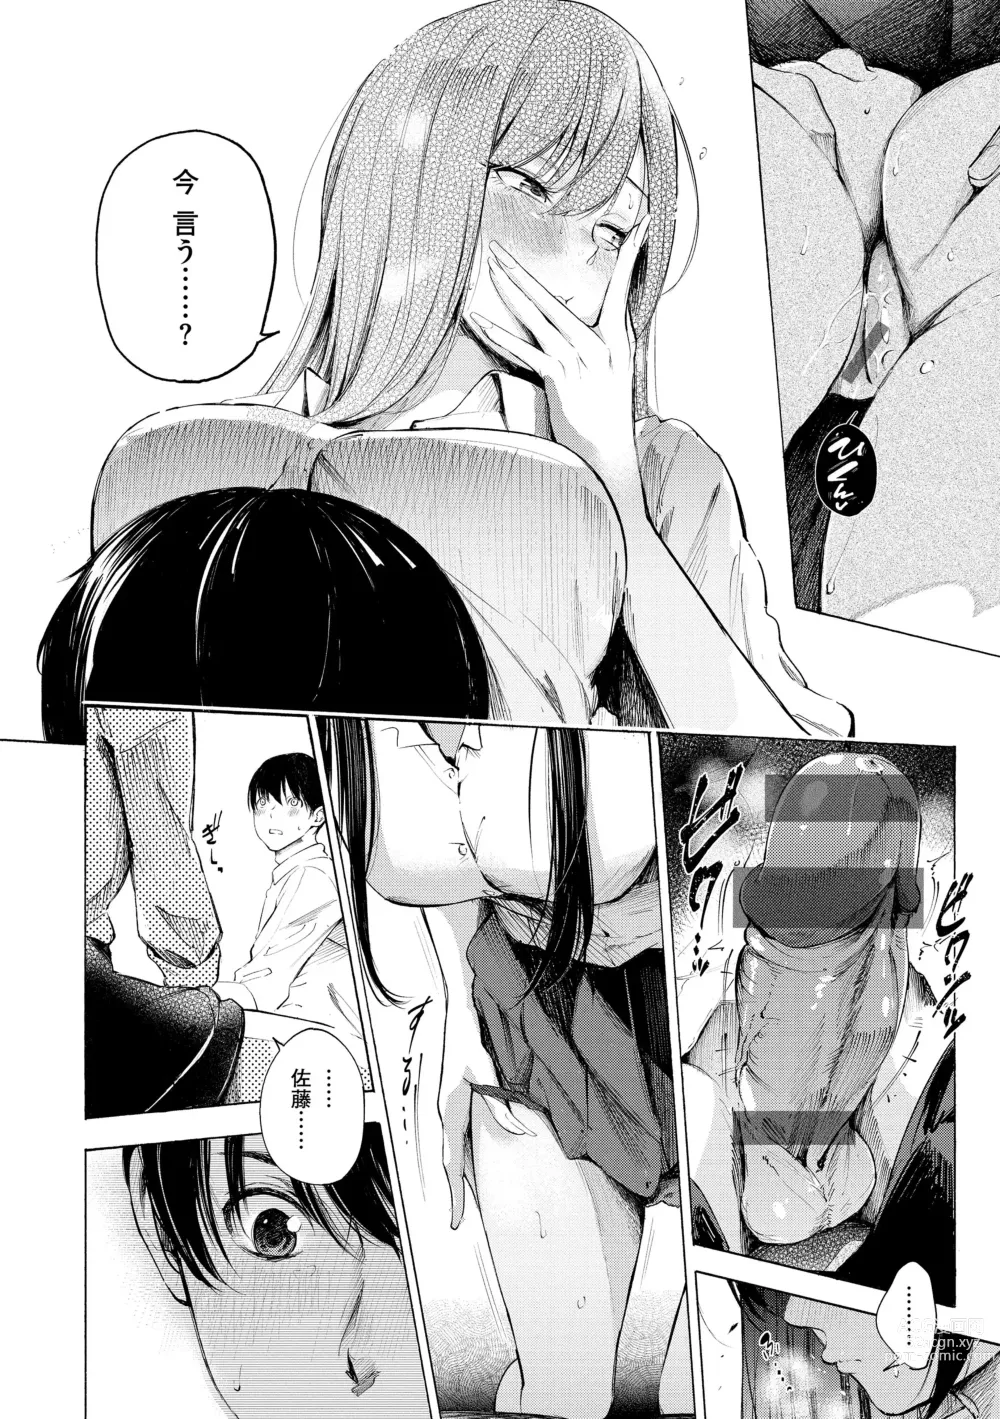 Page 186 of manga Frustration Girls - Mura Mura Girls ready for you!!